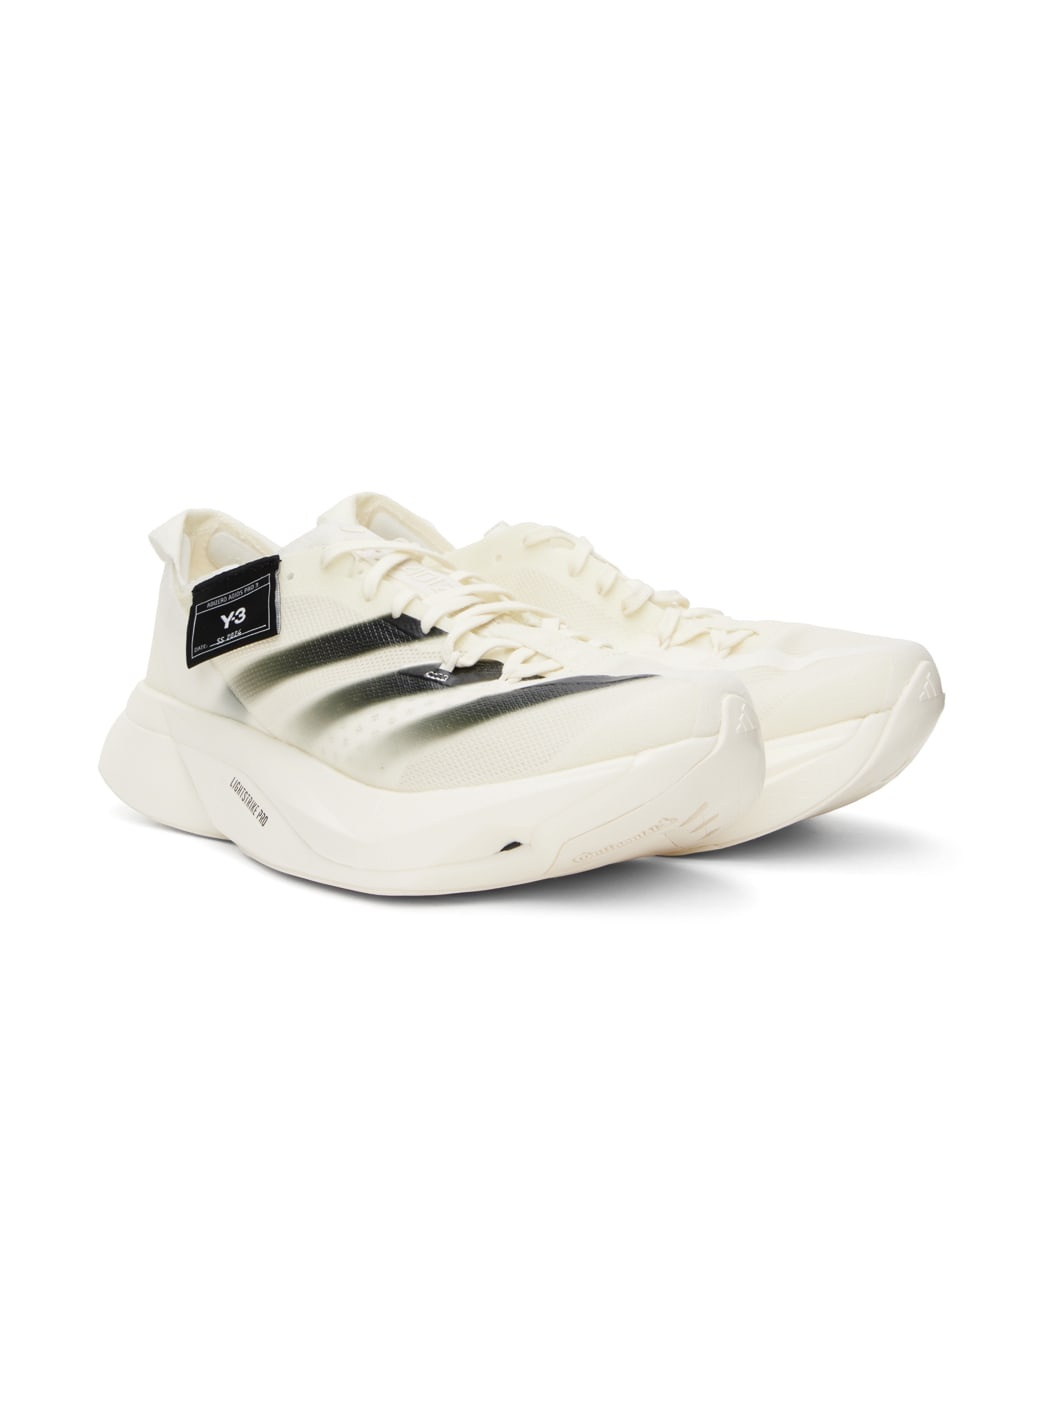 Off-White Adios Pro 3.0 Sneakers - 4